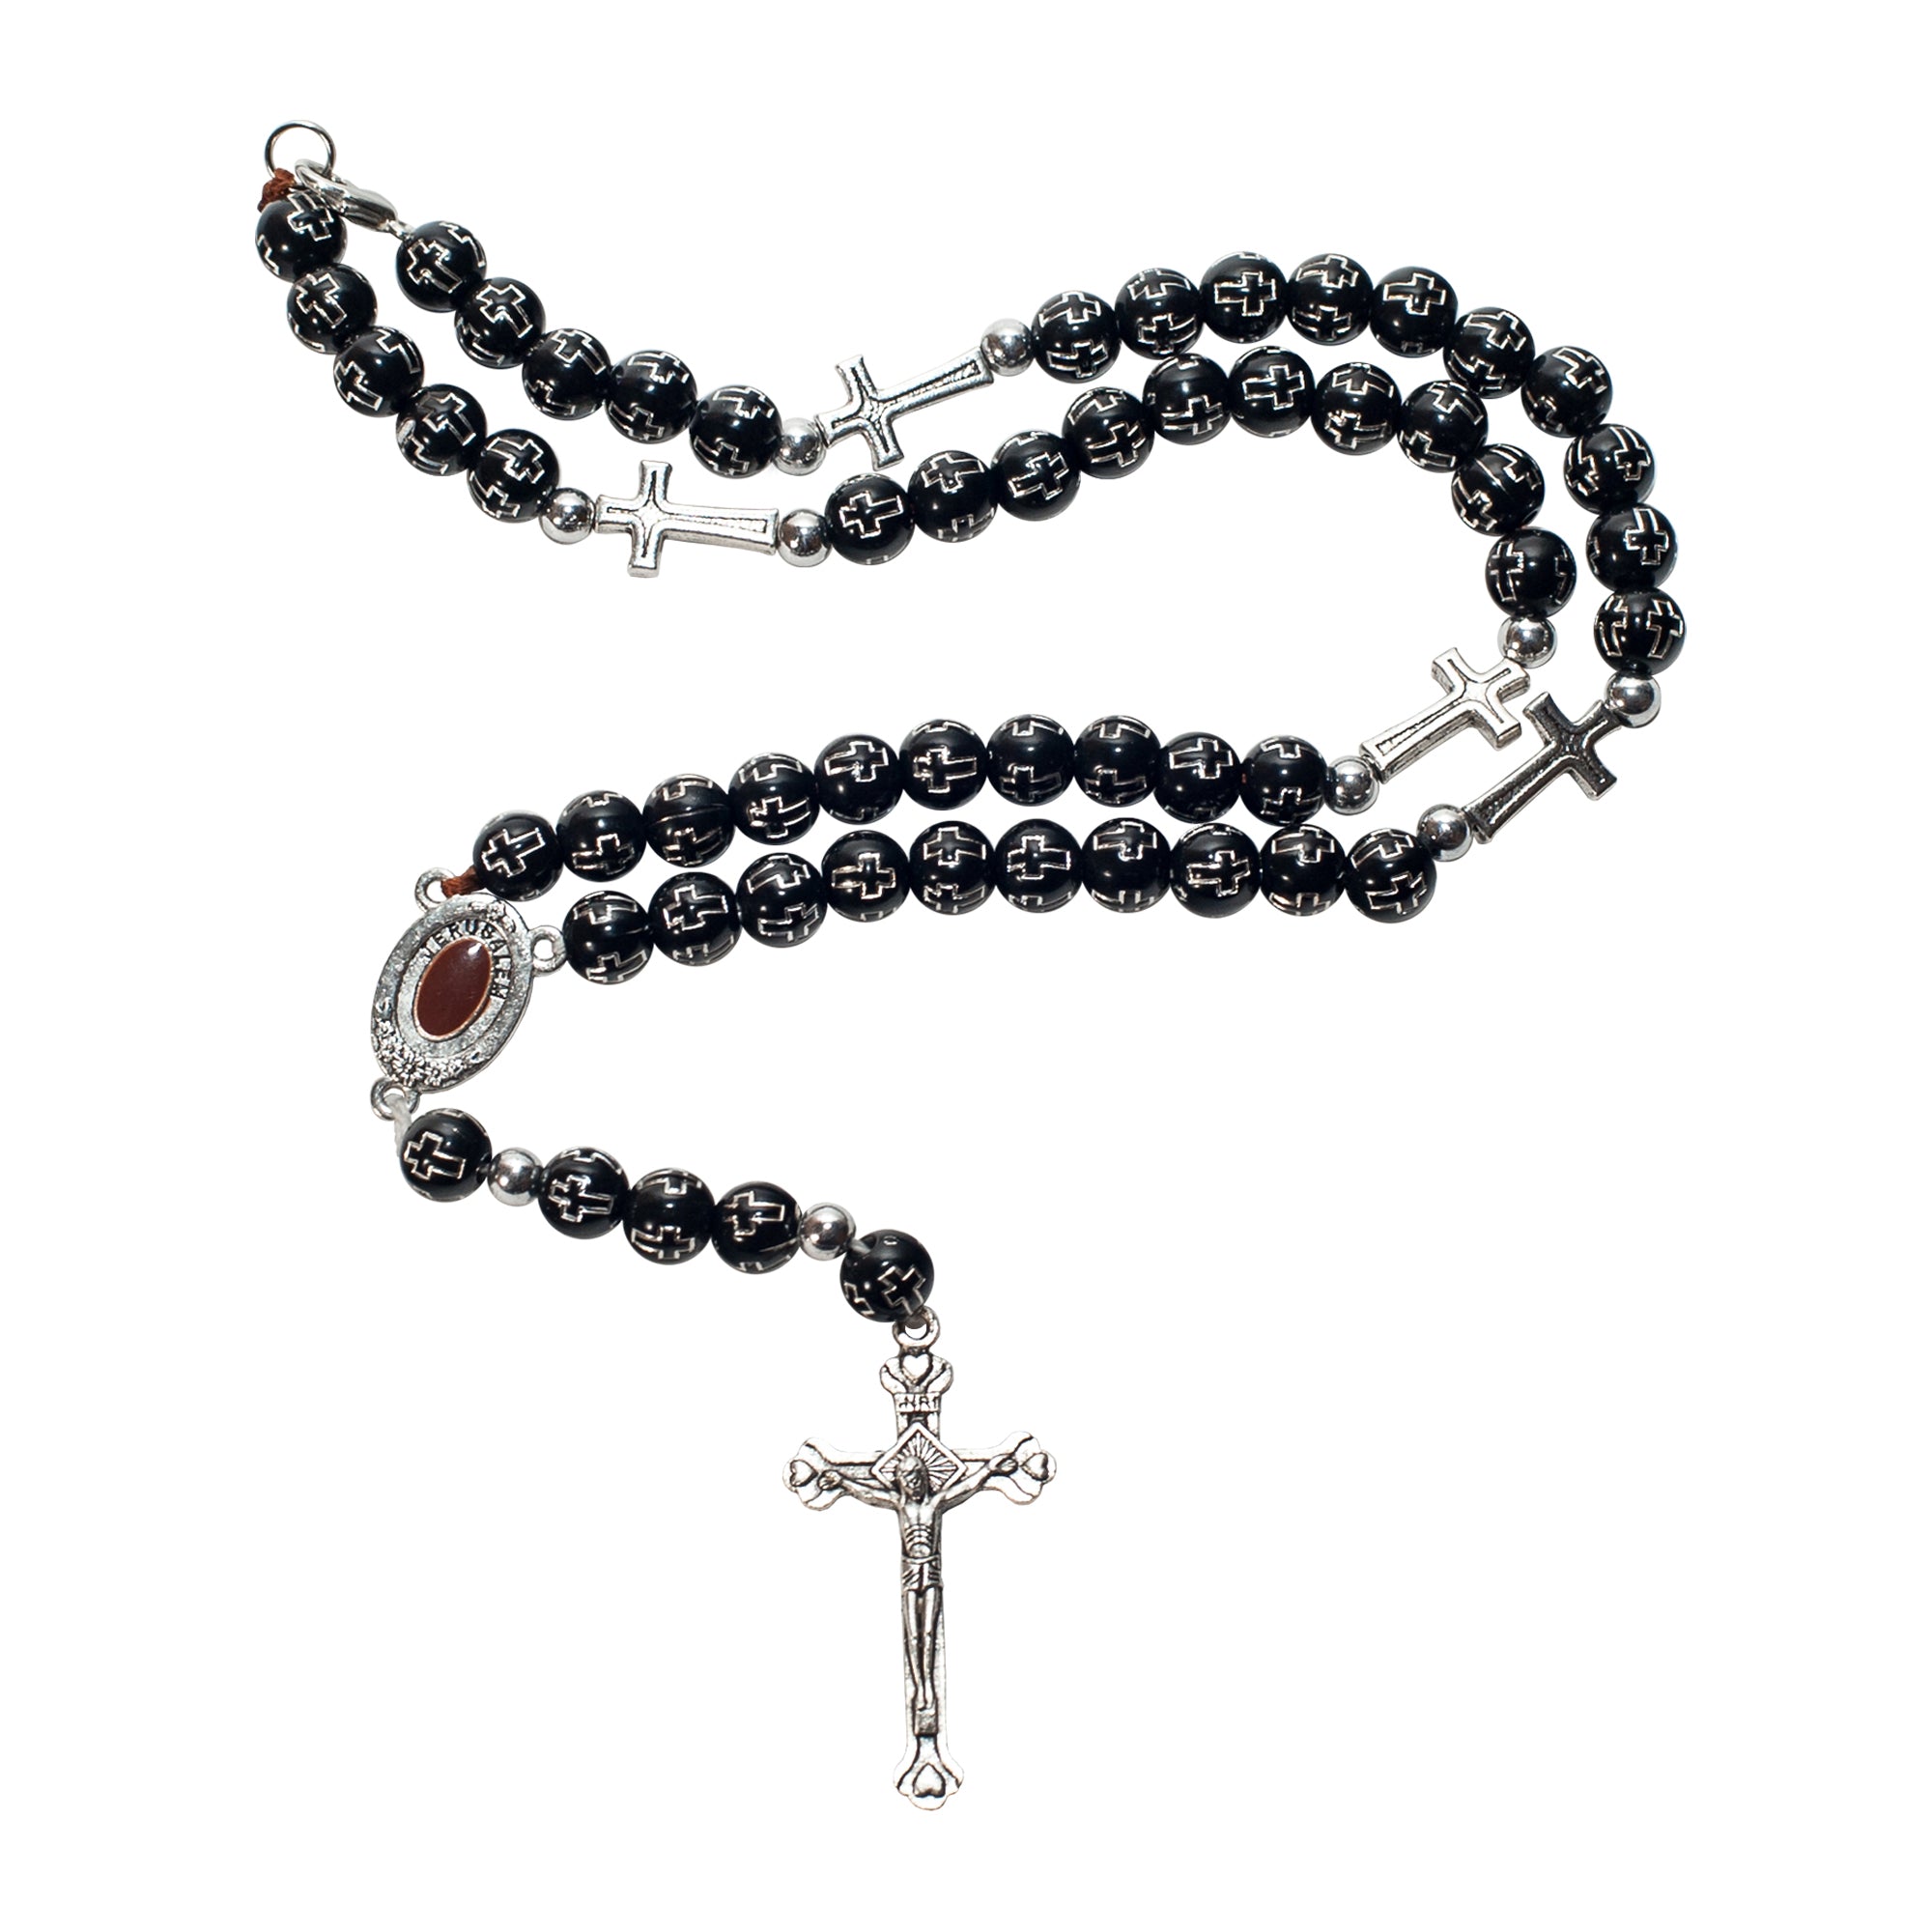 6mm Glass Beads Thread Rosary - Black - 6mm Glass Beads Thread Rosary -  Black